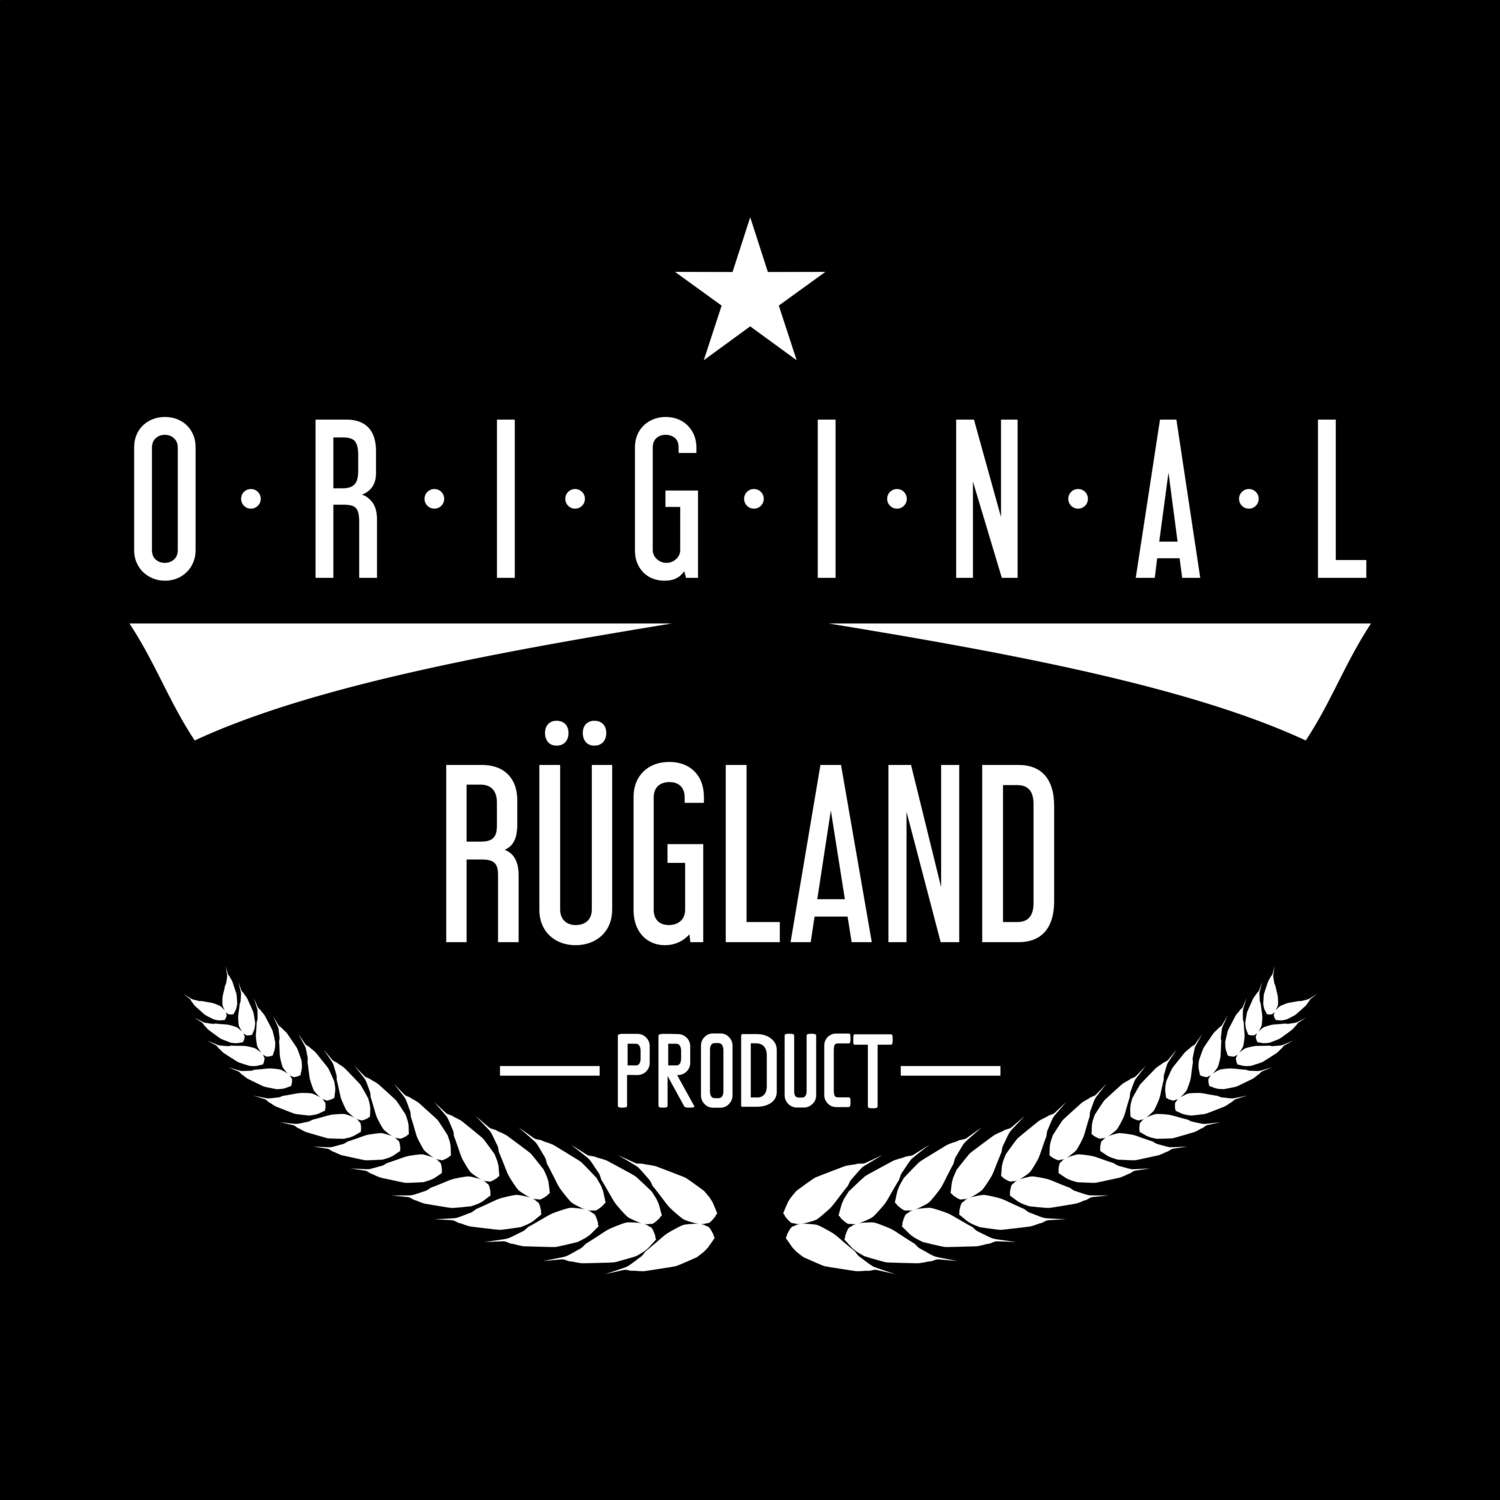 Rügland T-Shirt »Original Product«